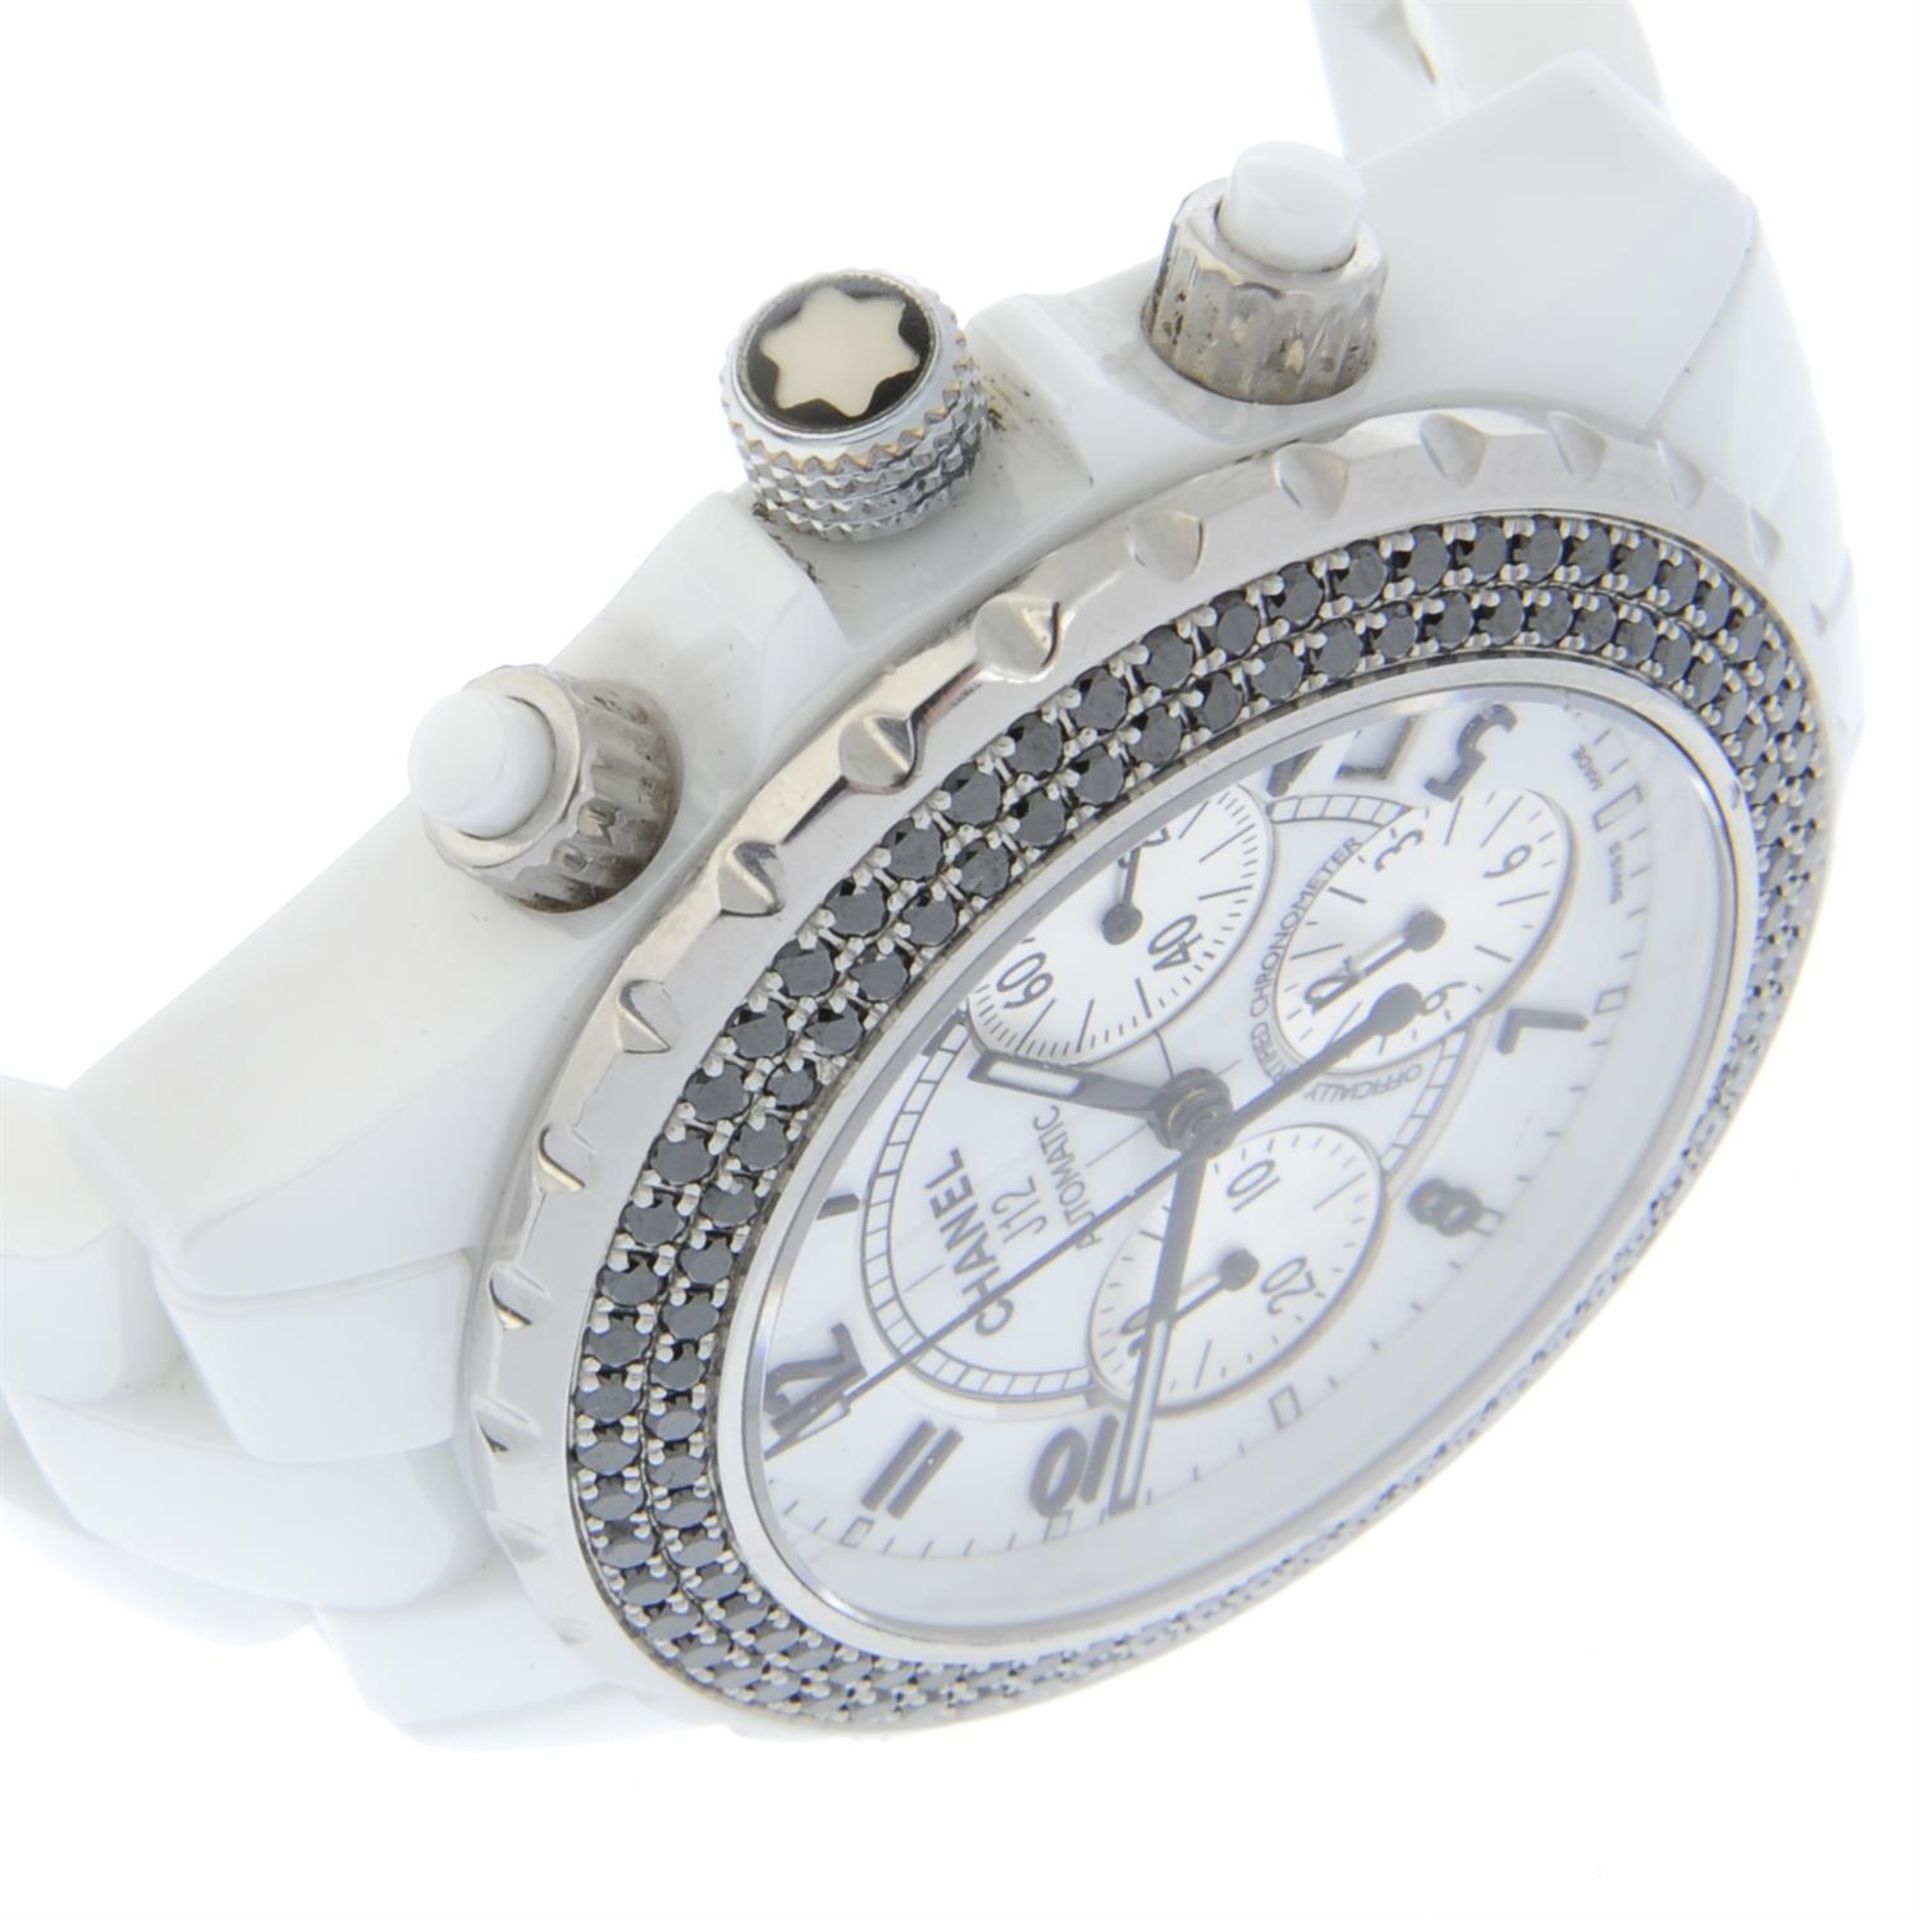 CHANEL - a ceramic J12 chronograph bracelet watch, 41mm. - Bild 3 aus 5